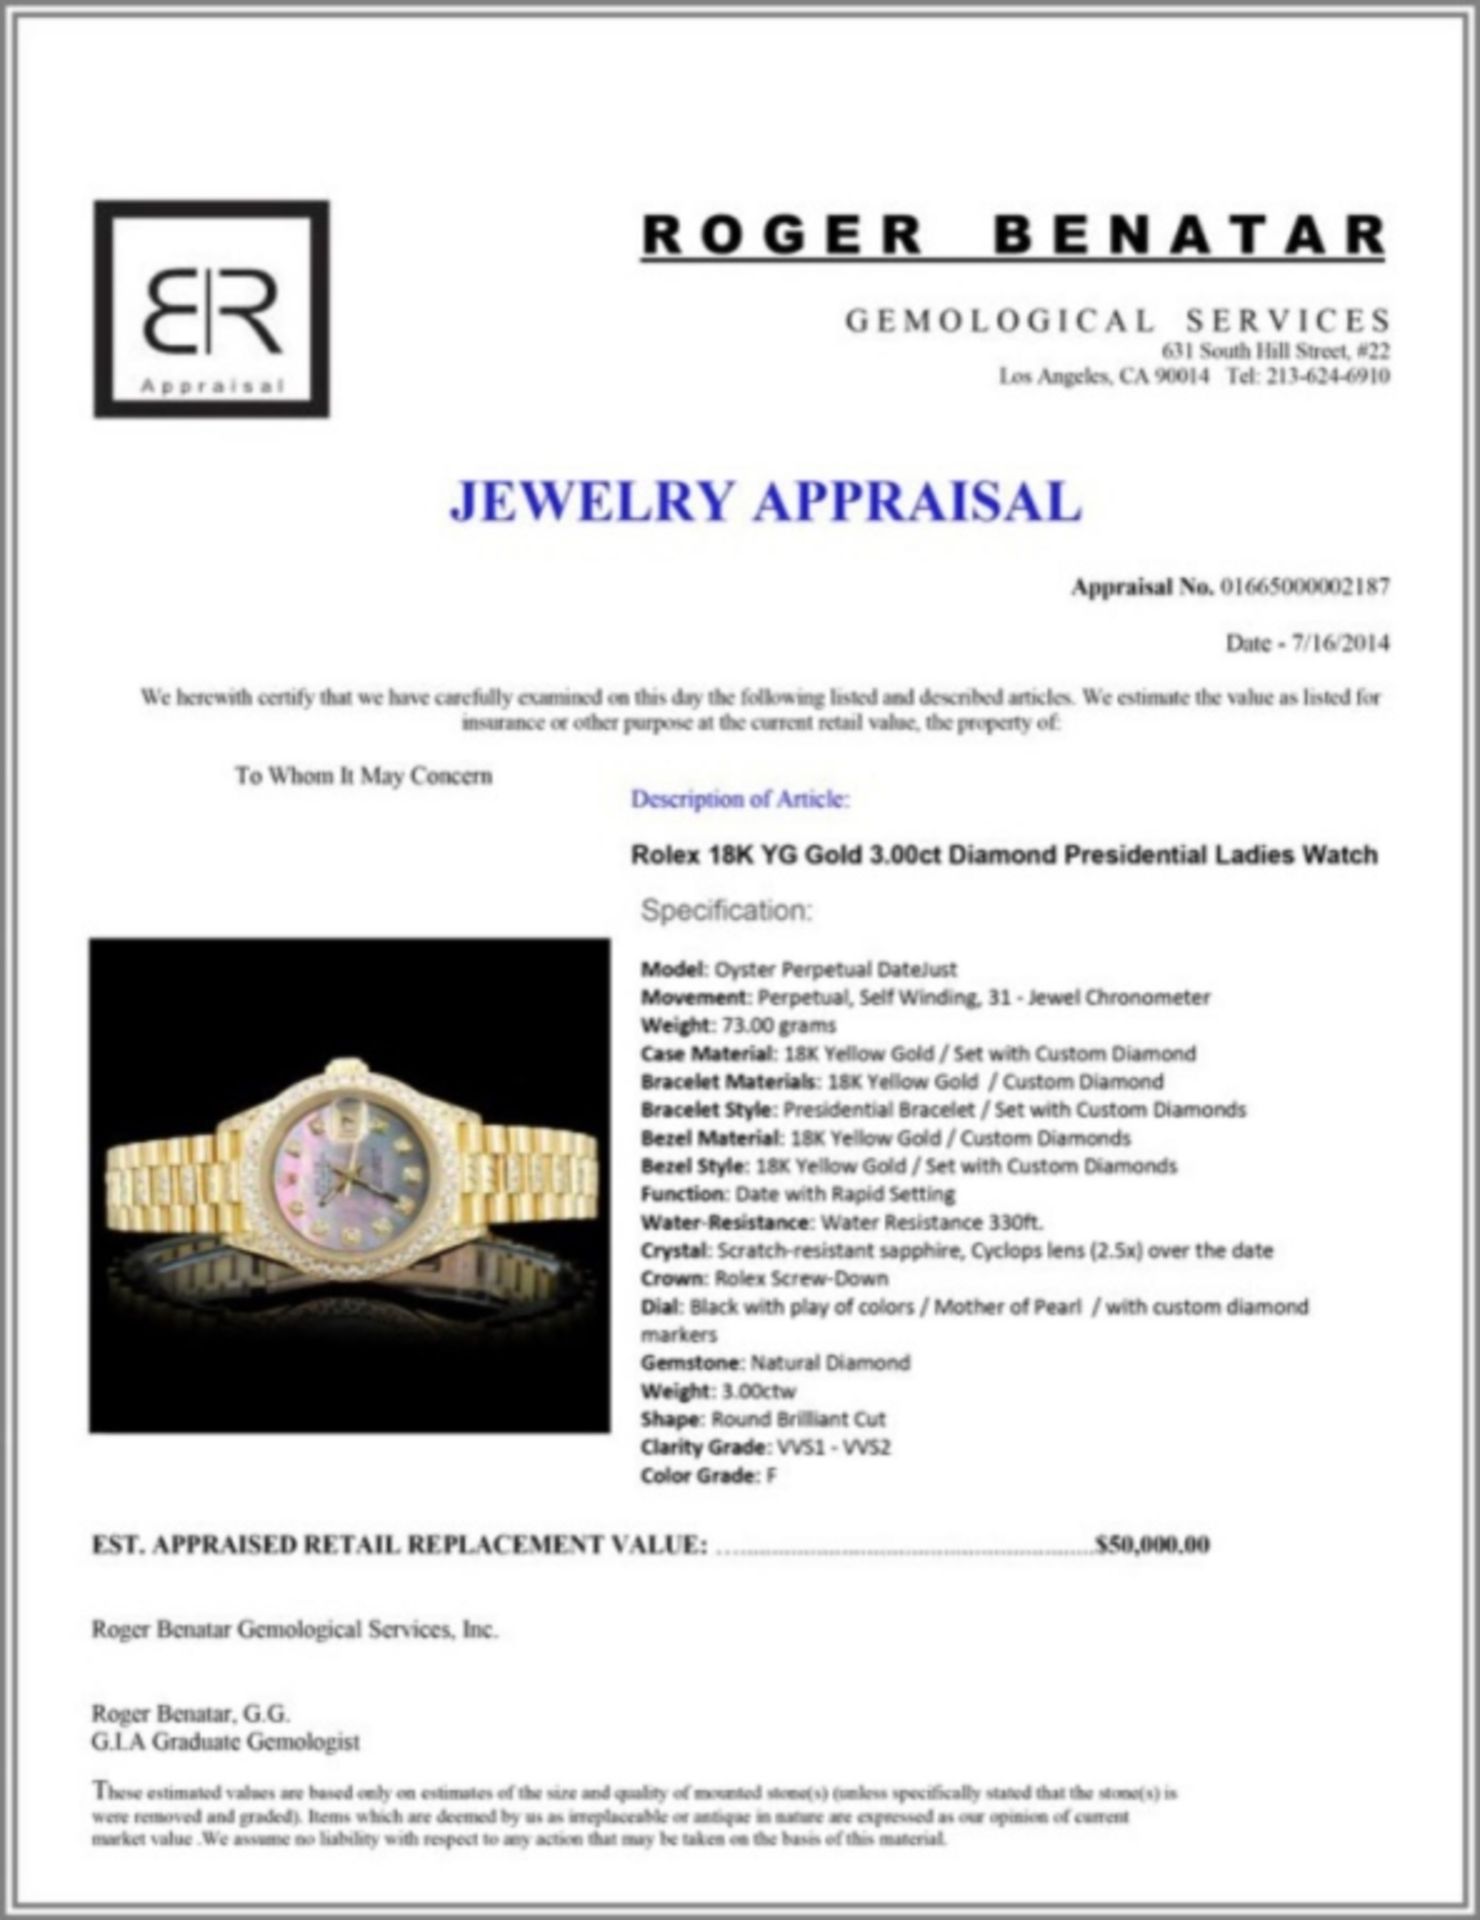 Rolex 18K 3.00ct Diamond Presidential Ladies Watch - Image 6 of 7